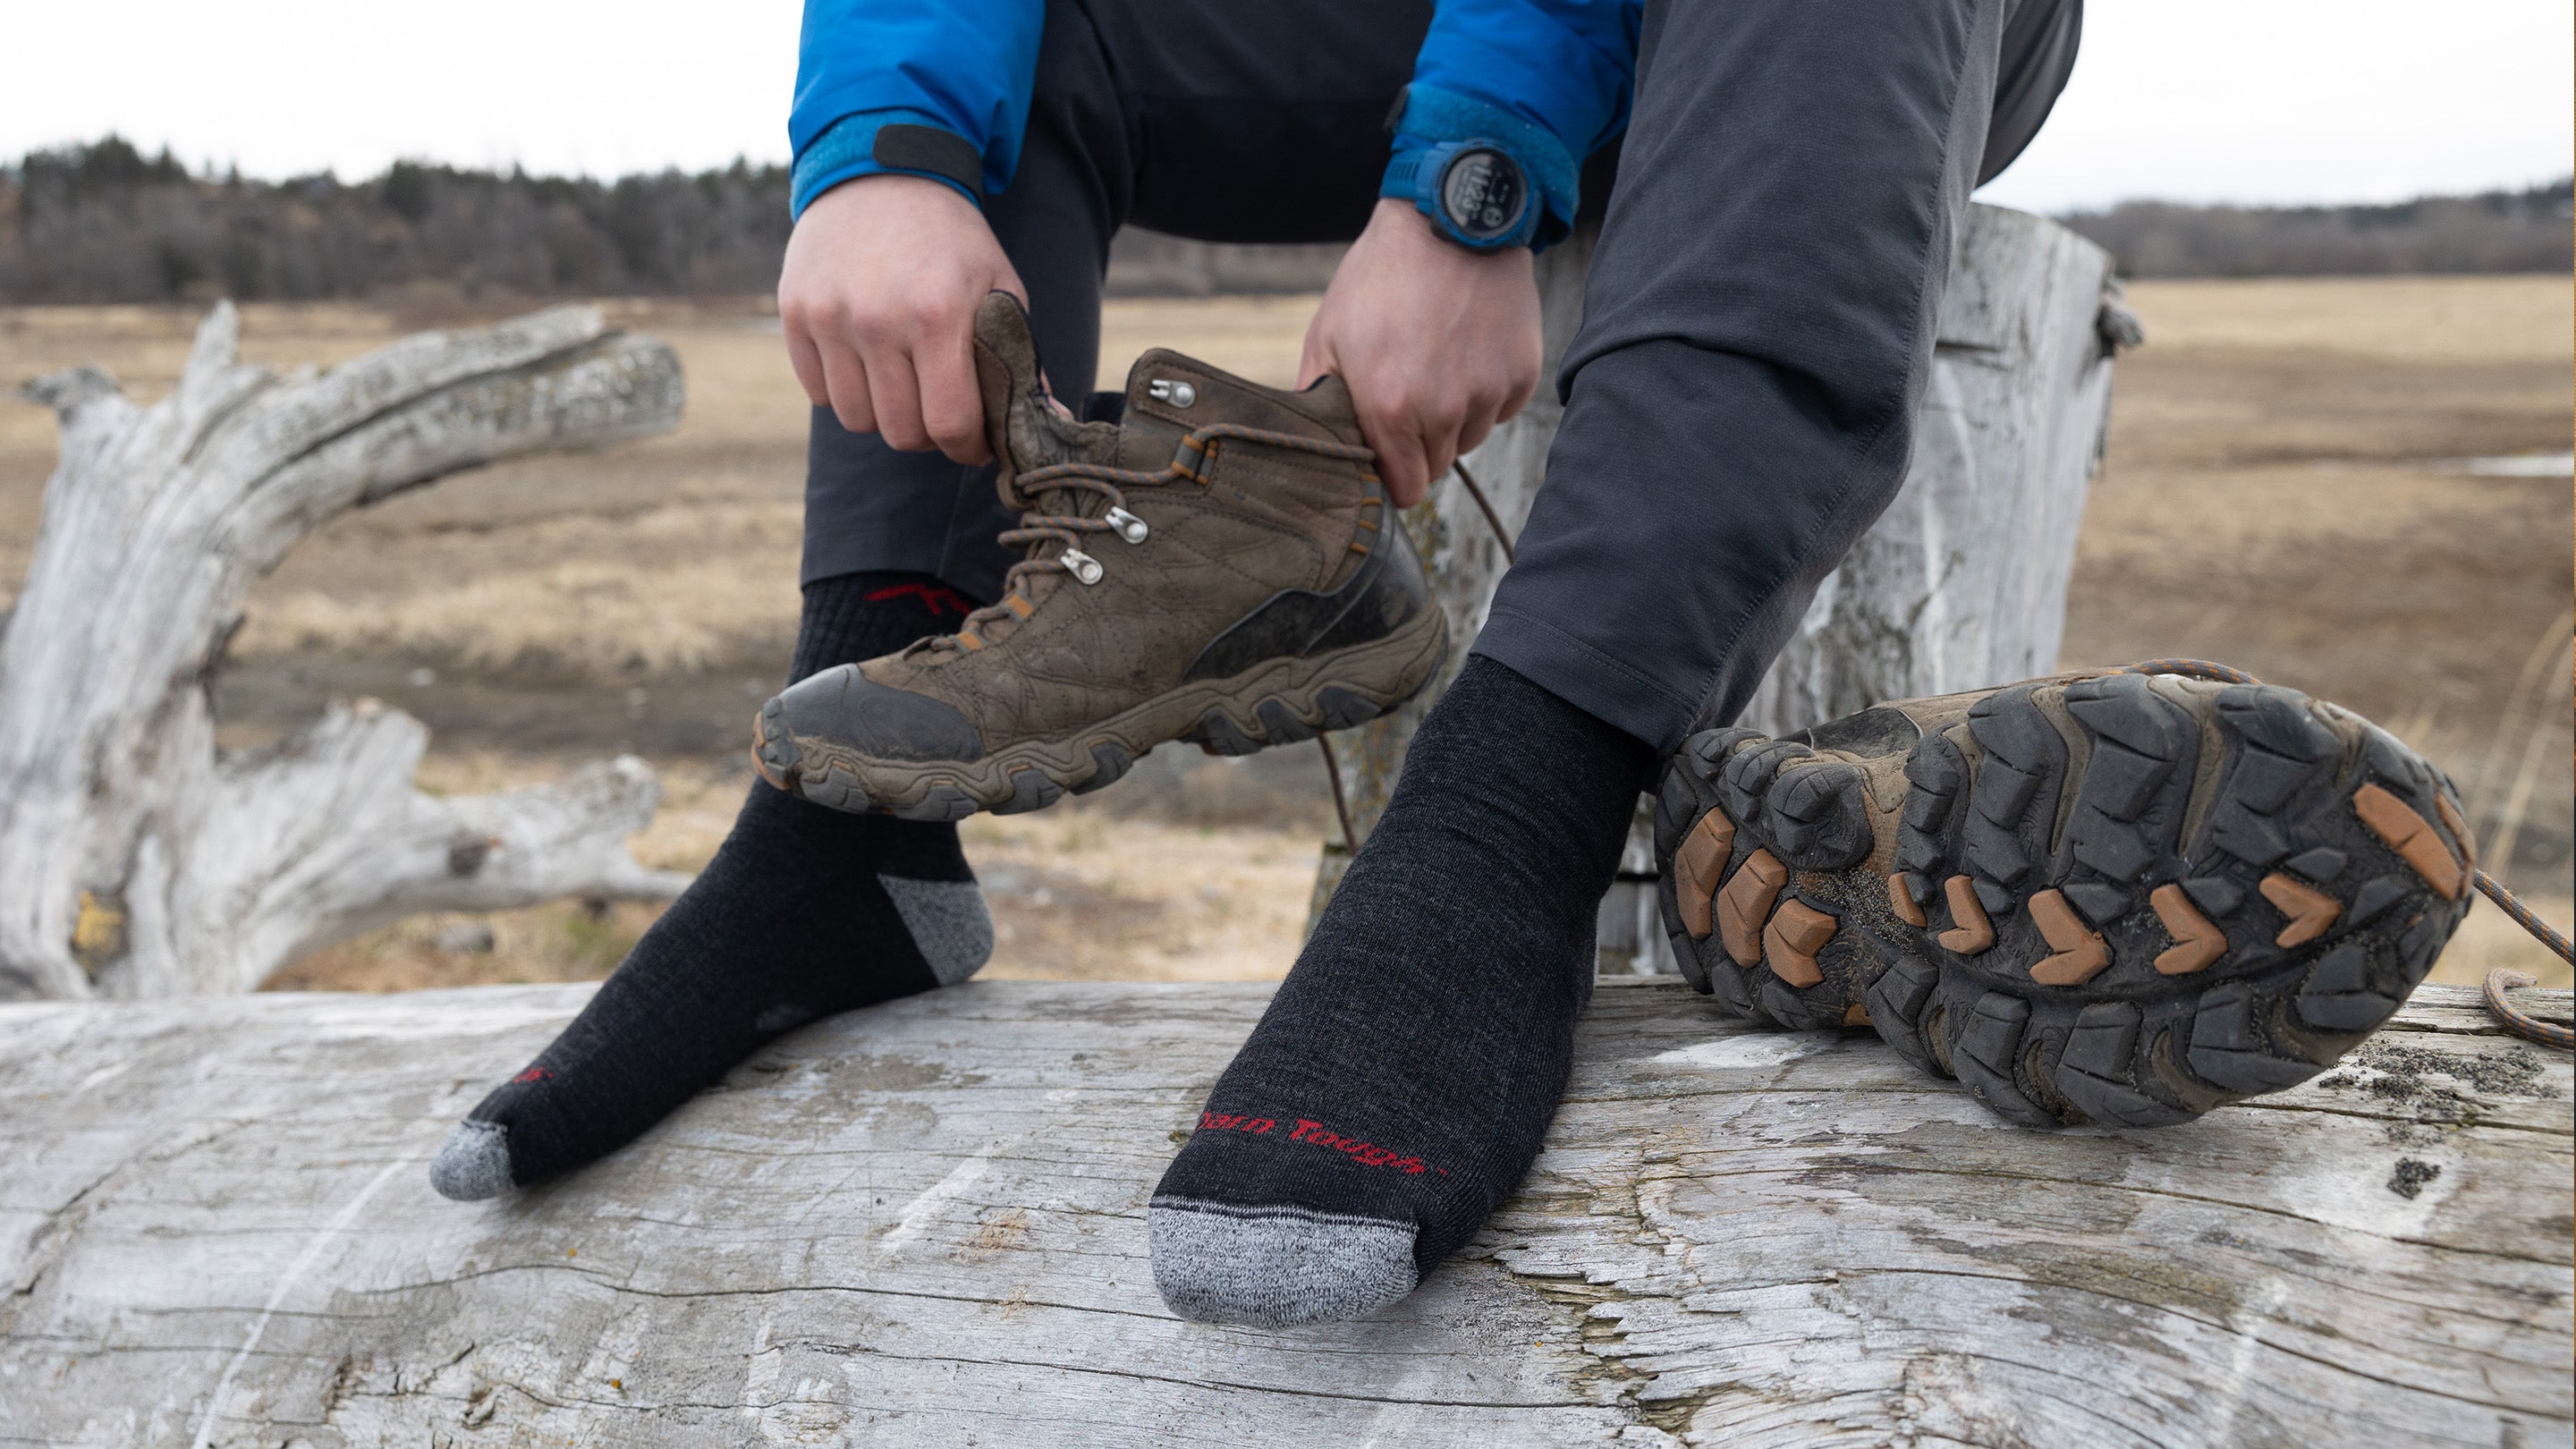 All Ankle Socks – Darn Tough